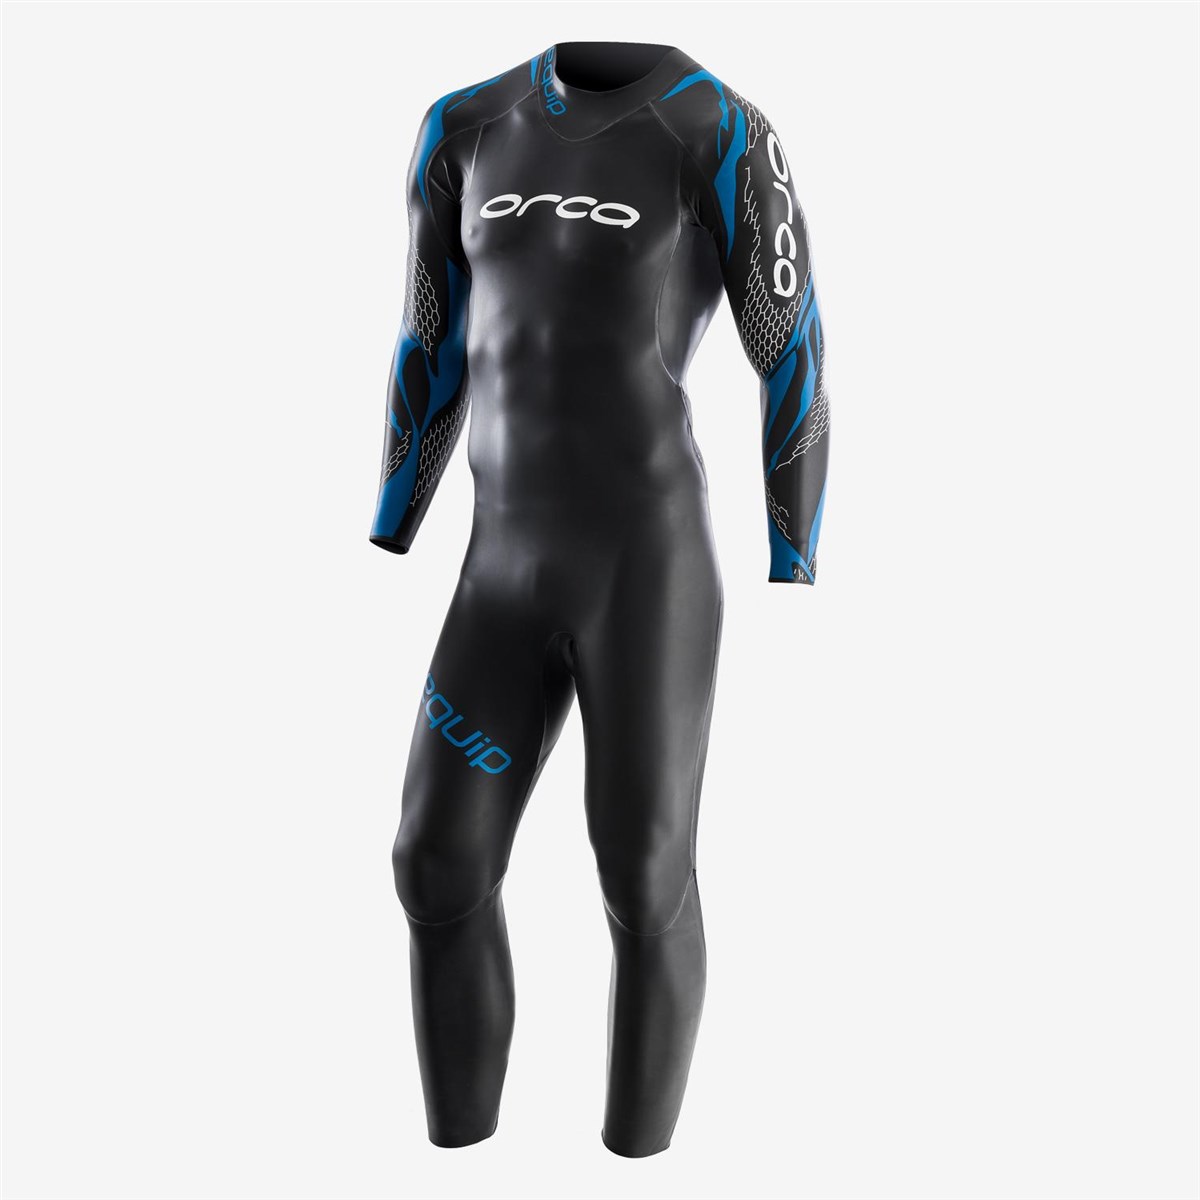 Orca Equip Full Sleeve Triathlon Wetsuit product image